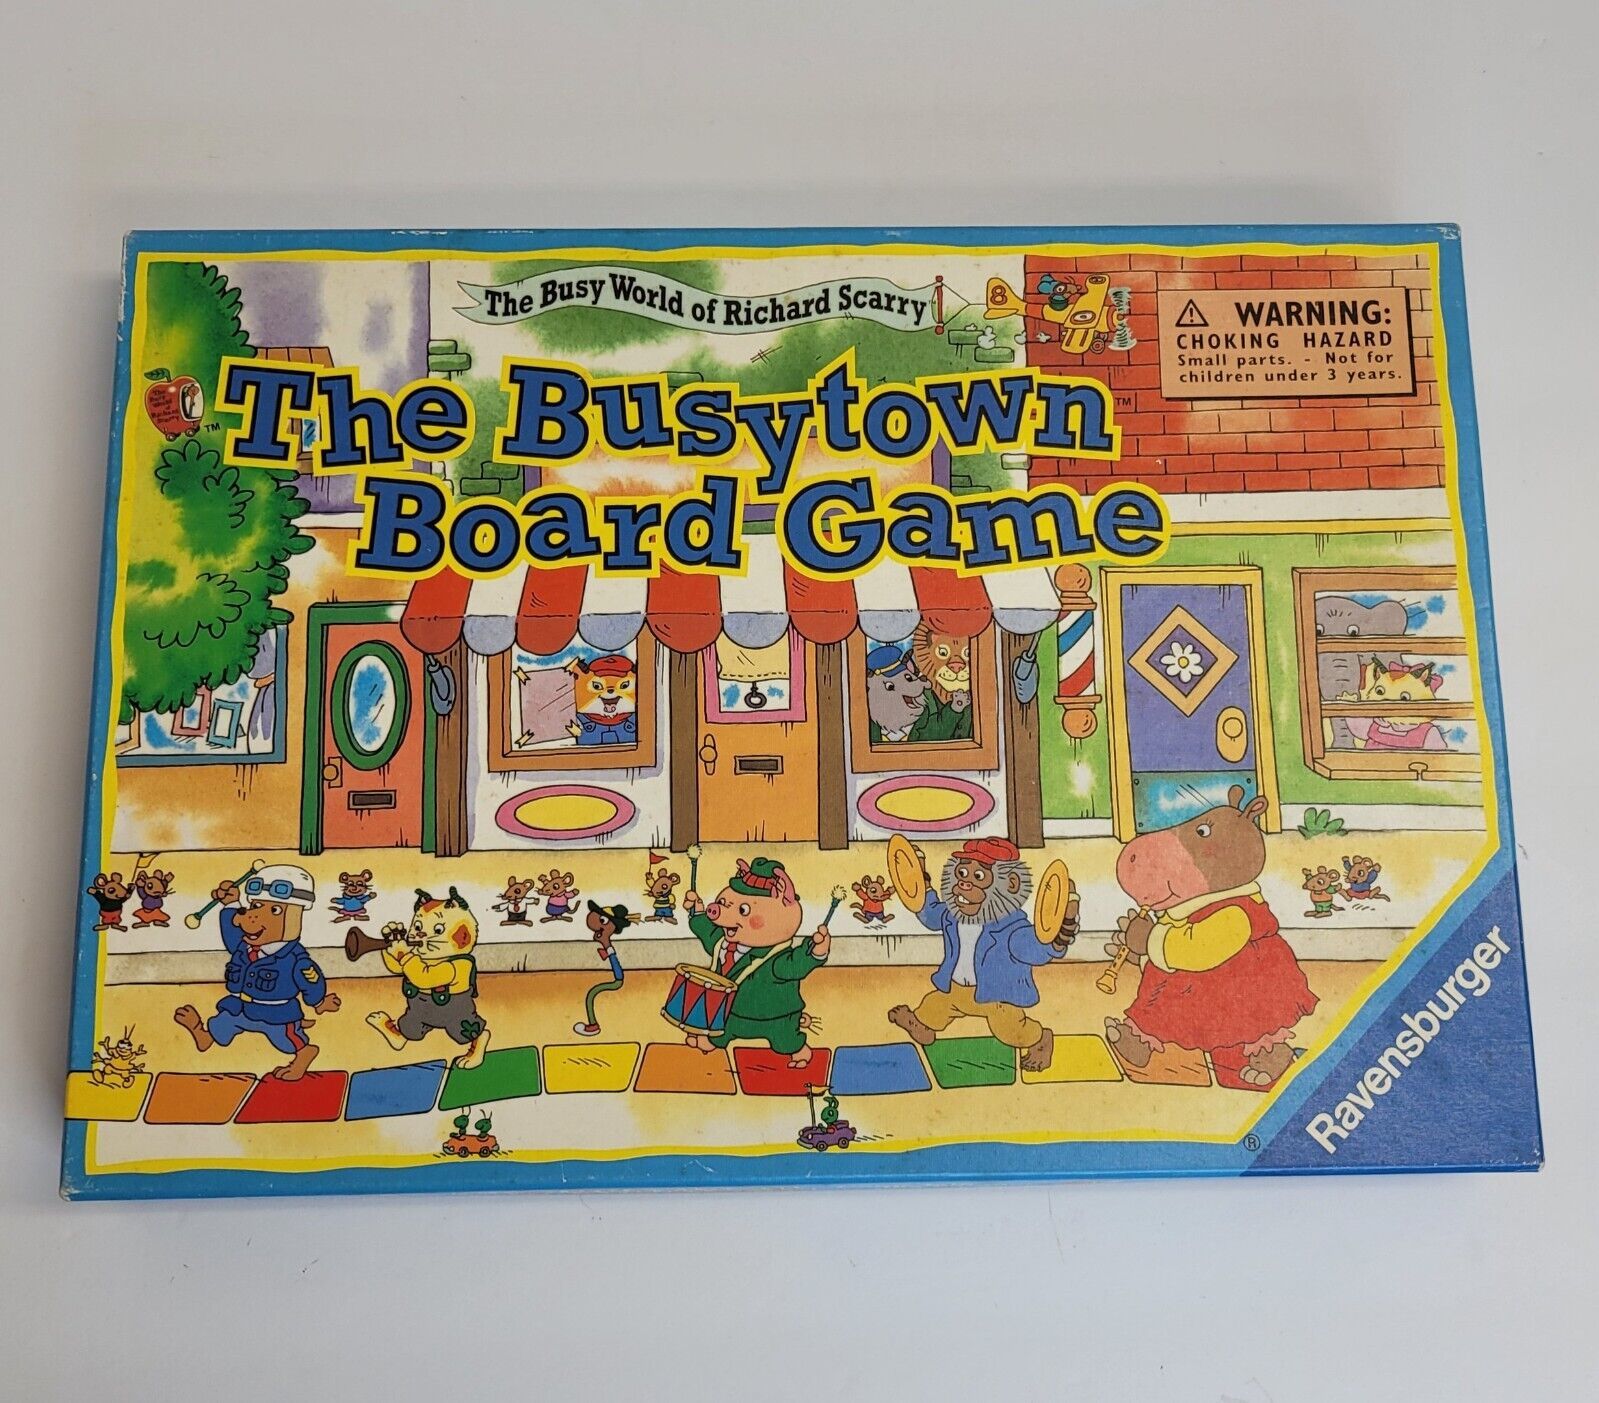 Vtg 1996 Ravensburger Busytown Board Game World Richard Scarry INCOMPLETE PARTS - $14.84